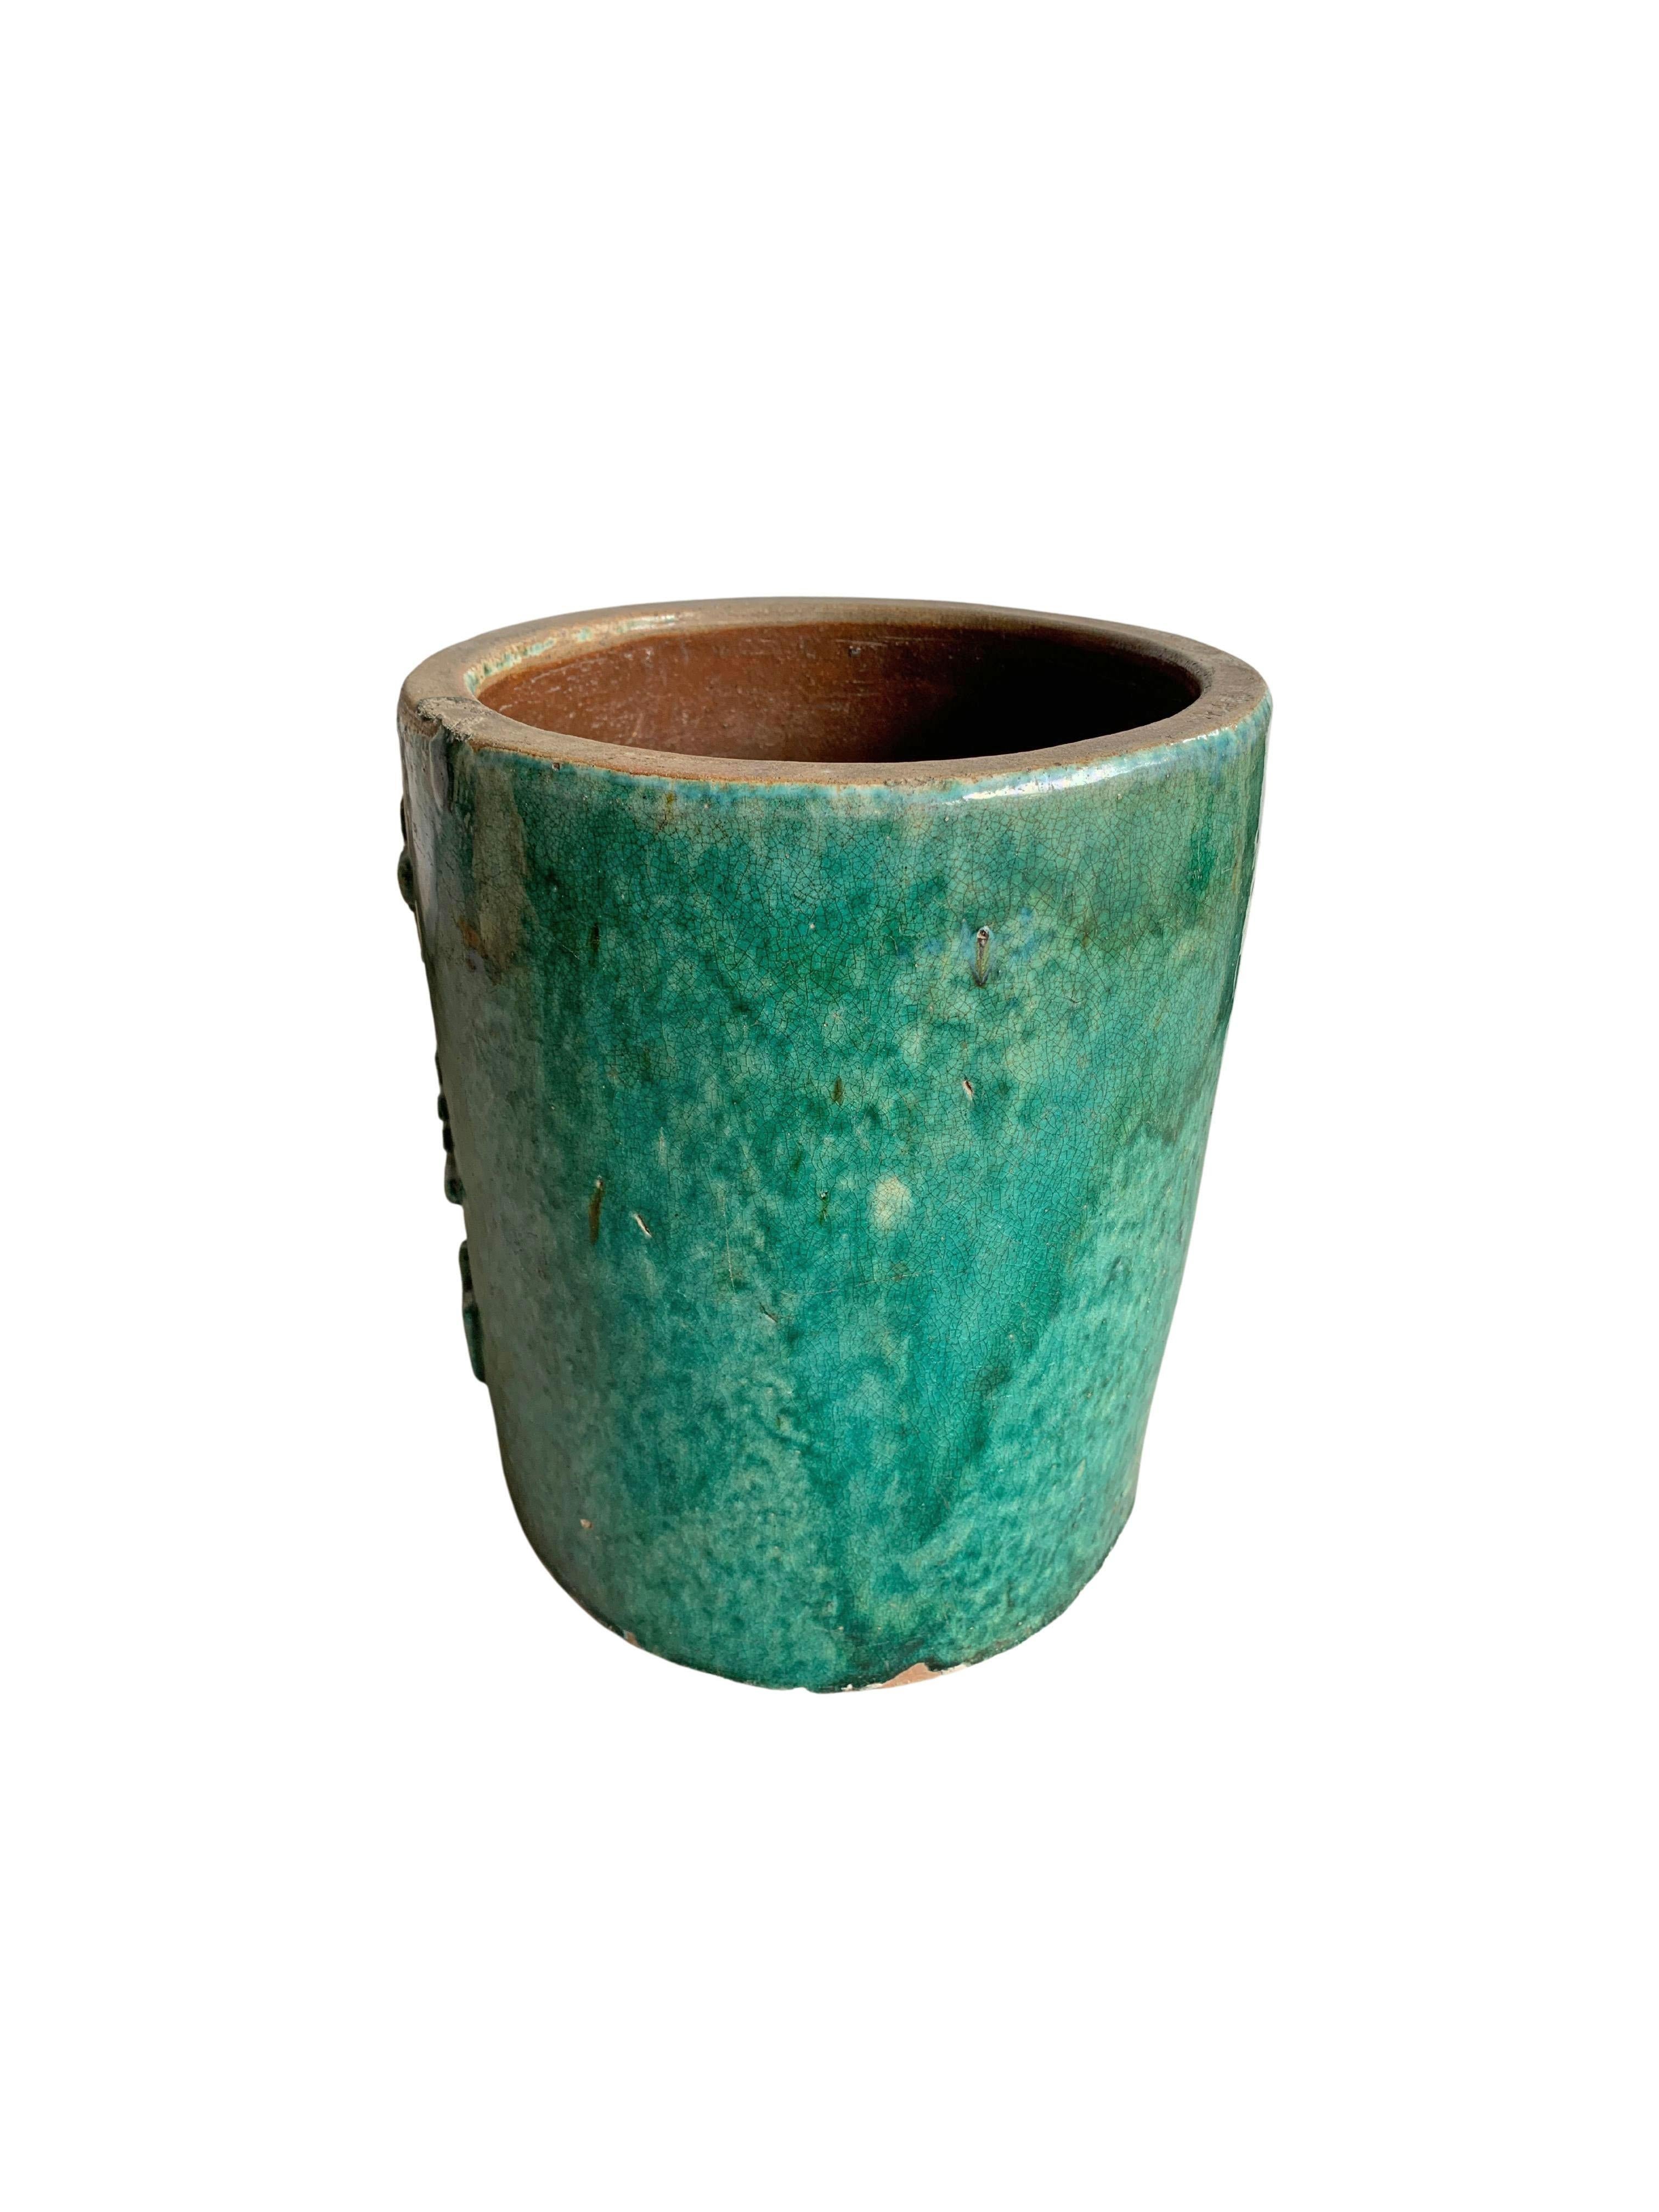 Chinese Green Glazed Ceramic Soy Sauce Storage Jar / Planter, c. 1900 For Sale 1